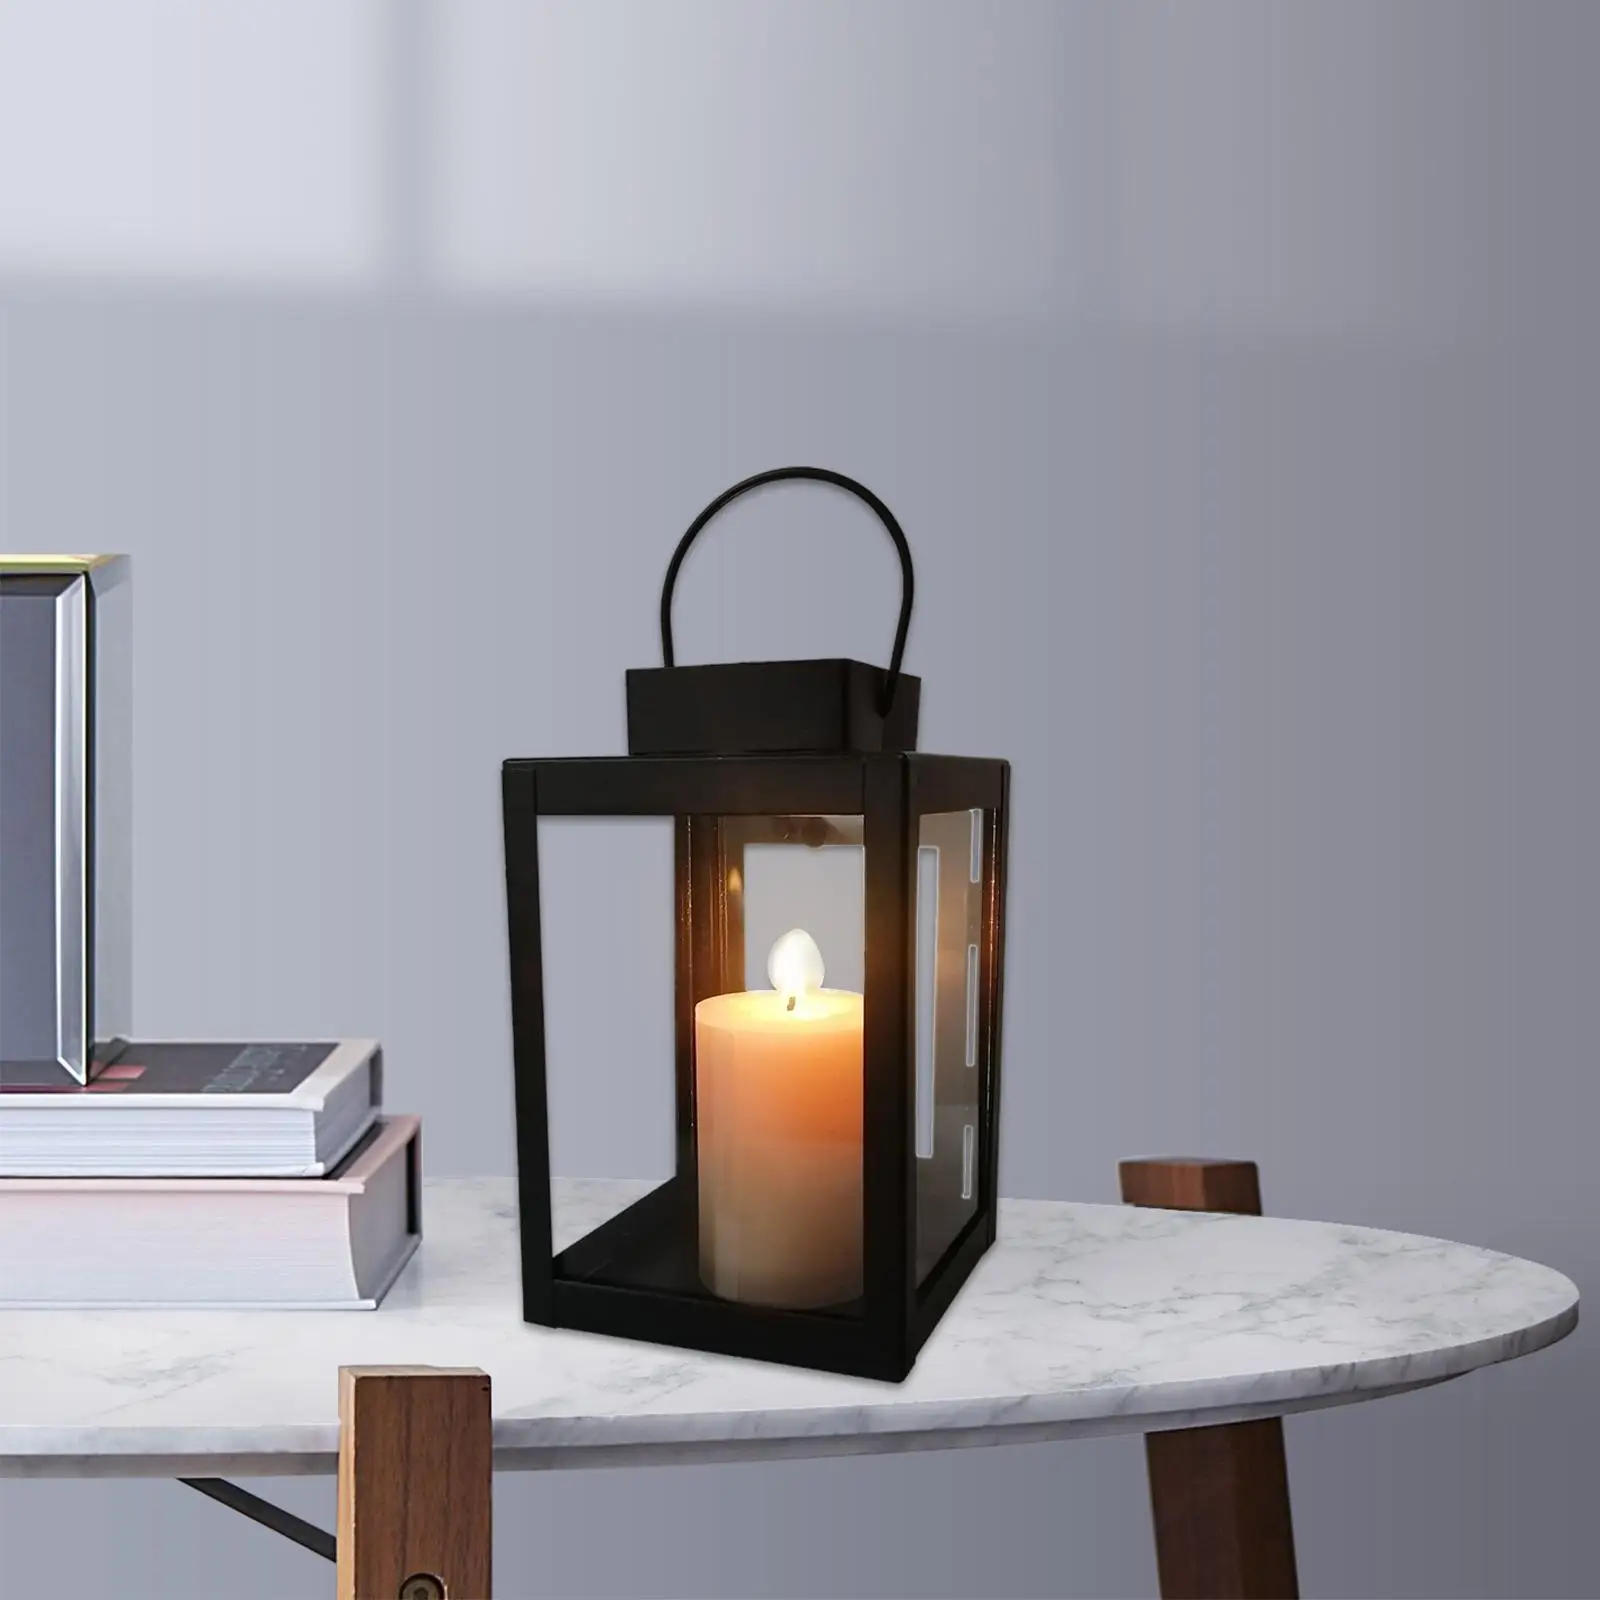 Candle Holder Lantern Windproof Lamp Tea Light Holder for Wedding Christmas